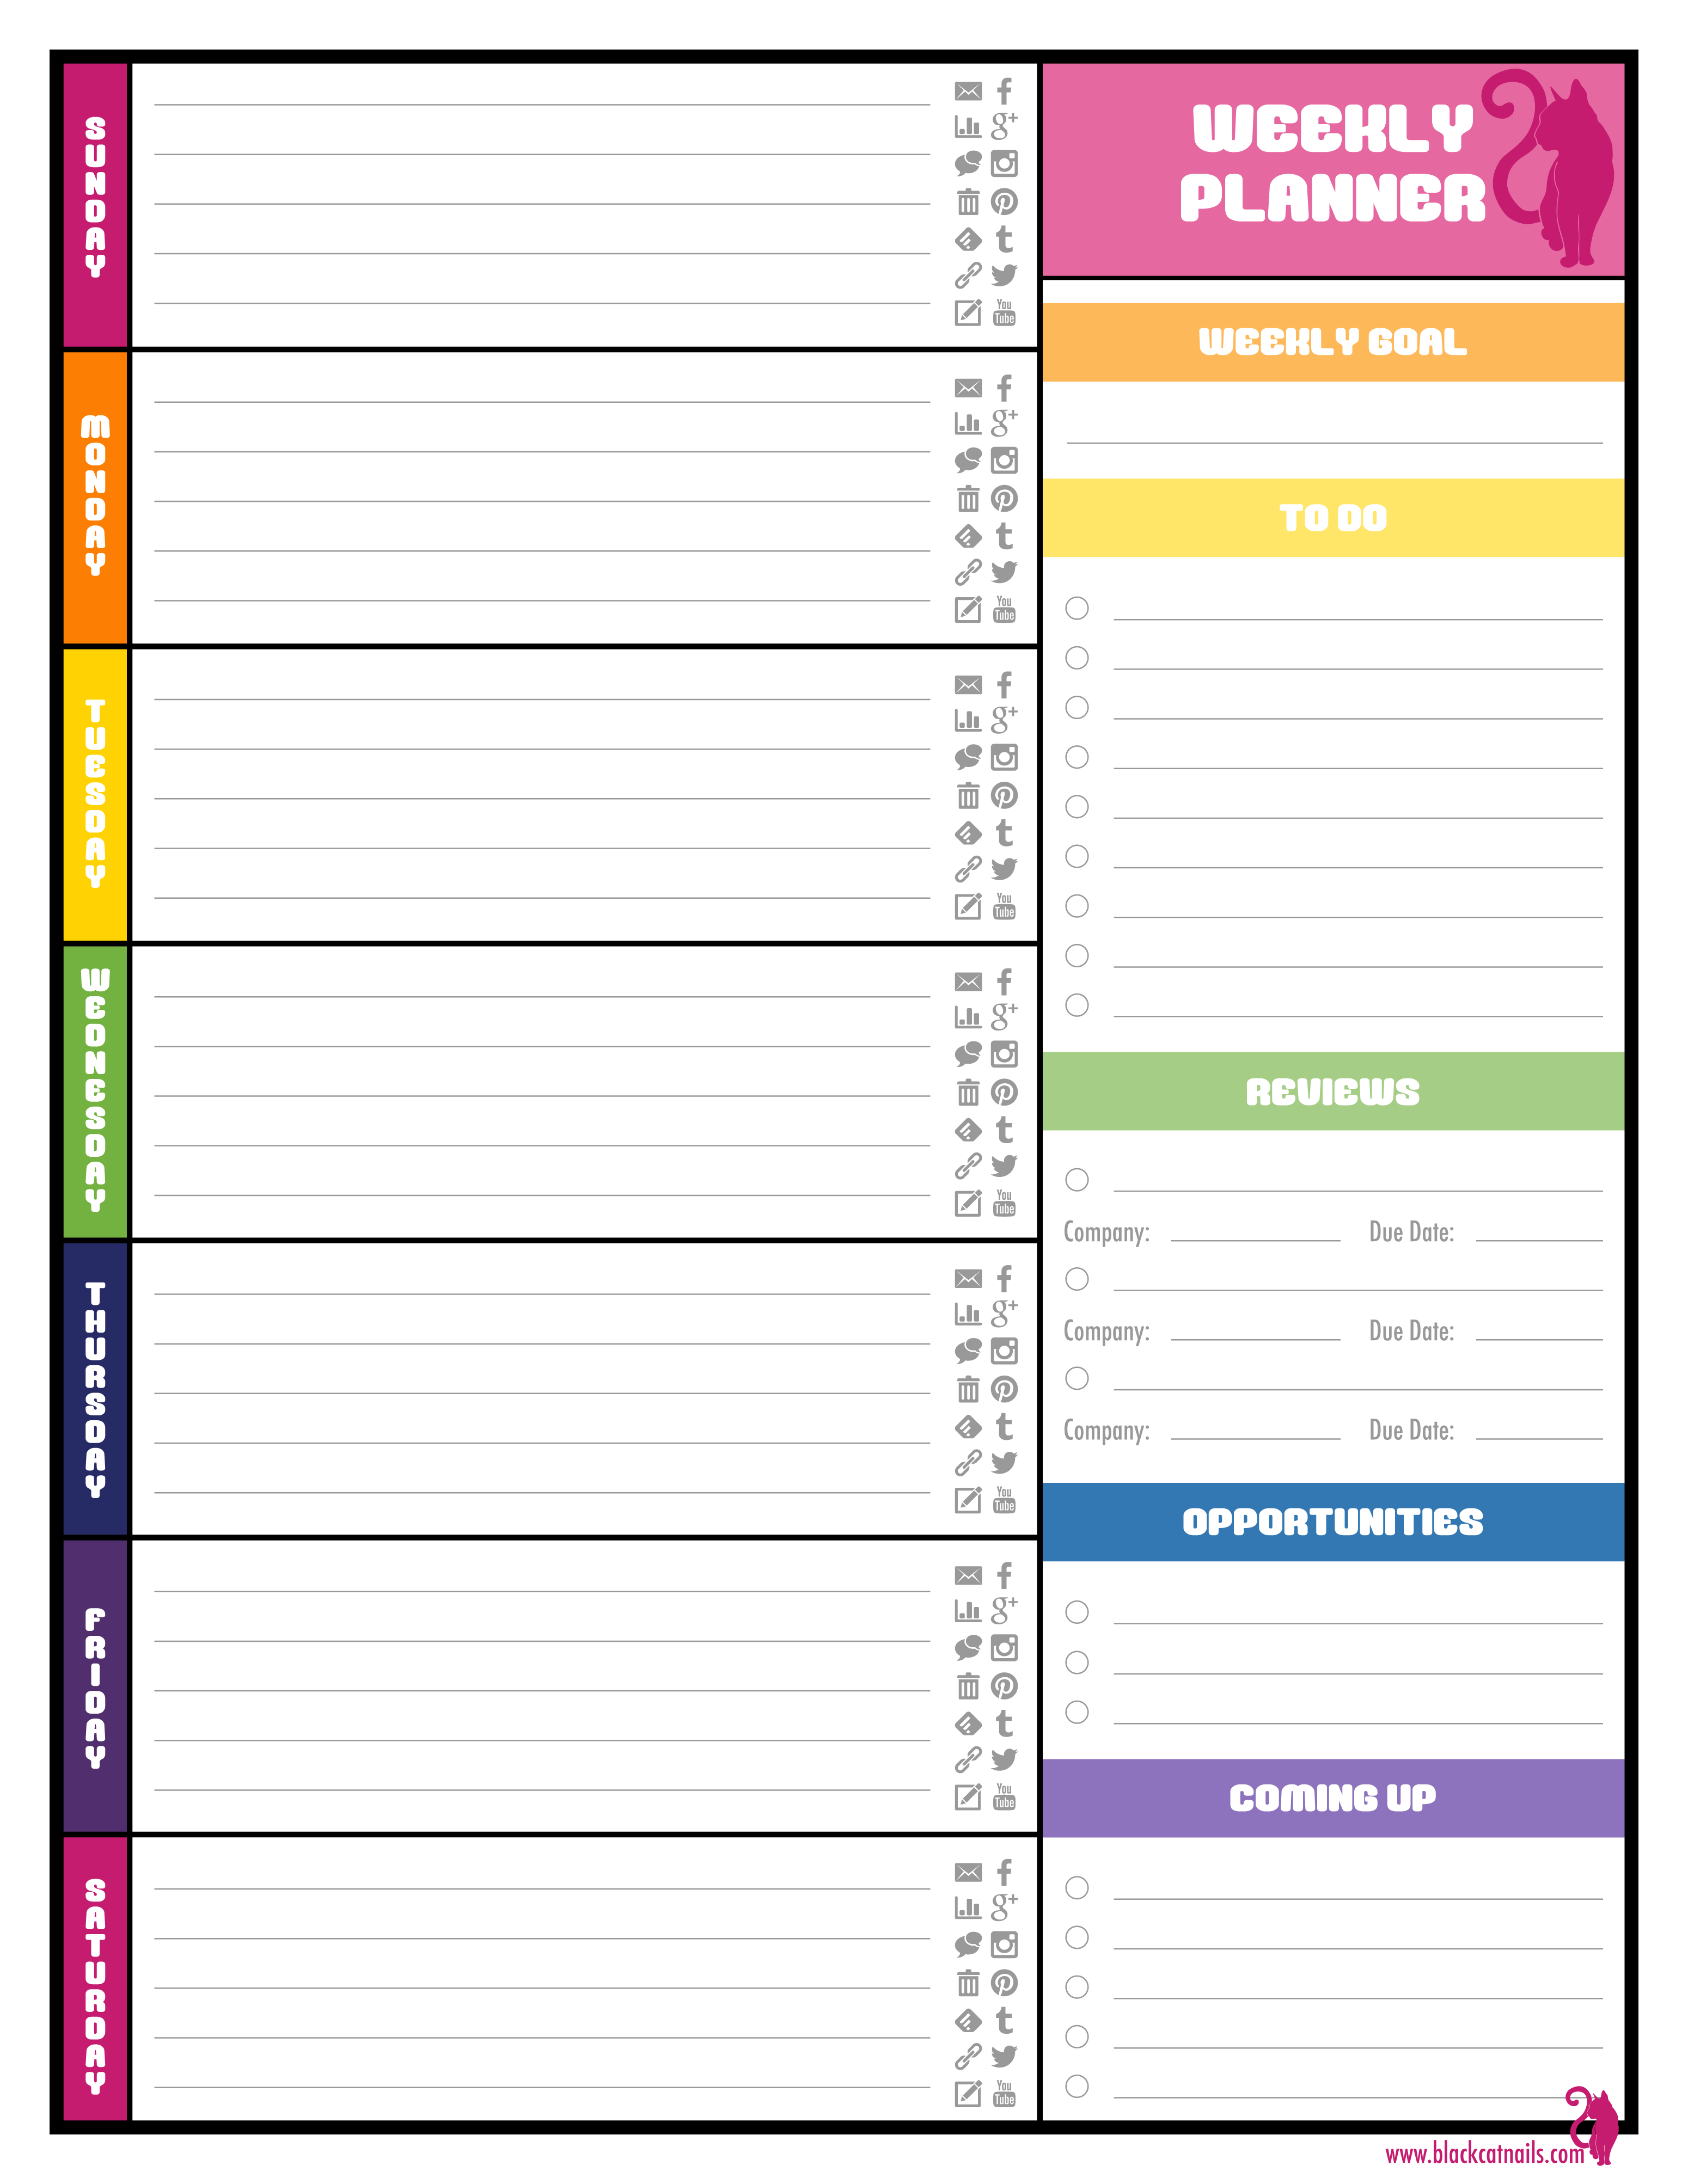 zuur Ligatie instinct 6 Best Images of Weekly Planner Printable 2016 Calendars - Excel ... -  ClipArt Best - ClipArt Best